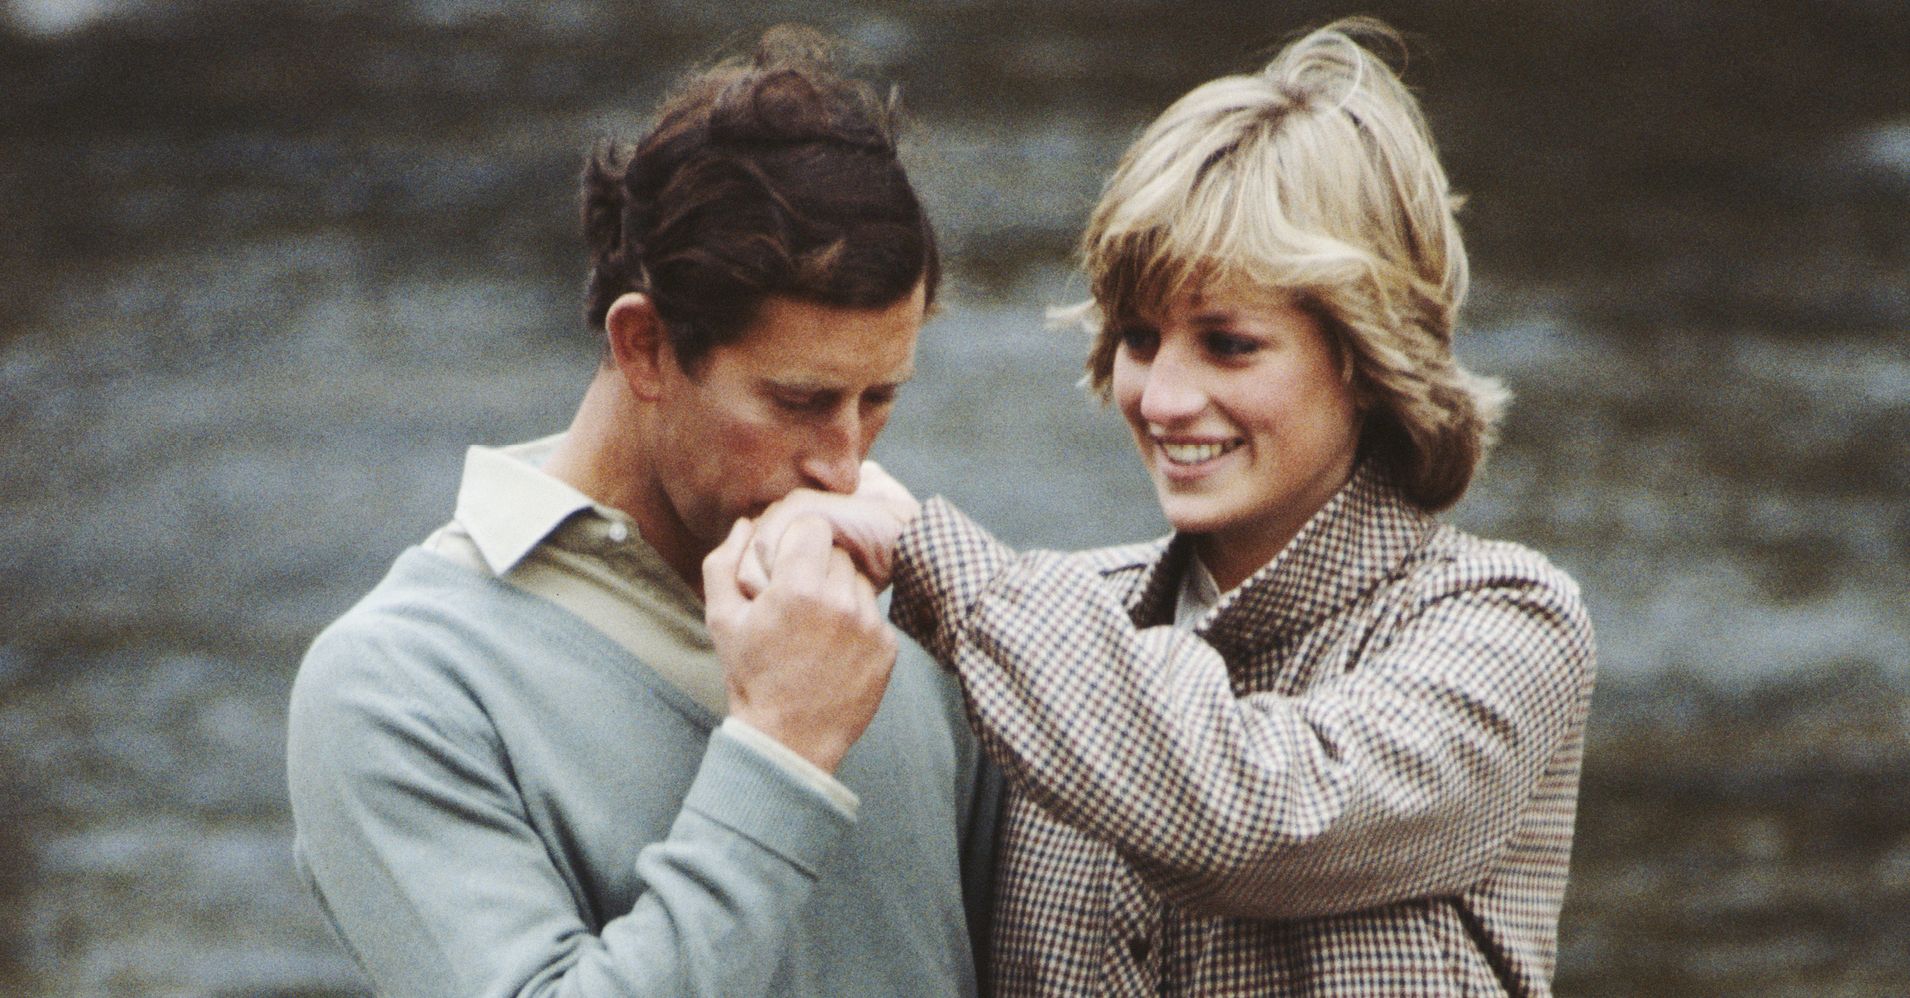 Vintage Pics Of Princess Diana And Prince Charles You'll Want To Pin ...